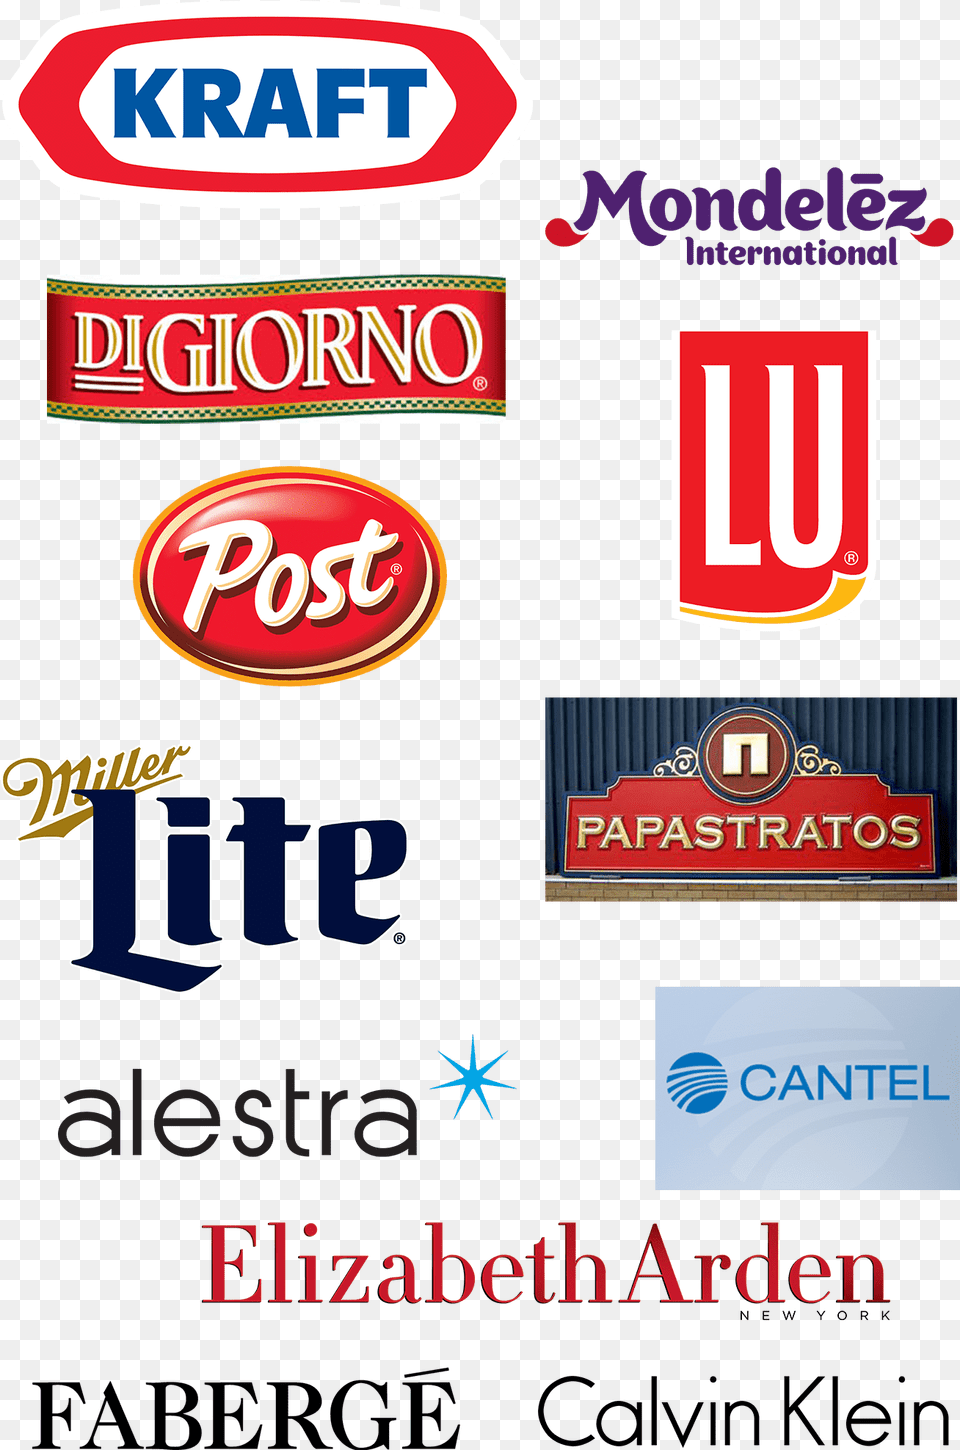 Split Of Kraft Into Separate Public Companies Poster, Advertisement, Logo Png Image